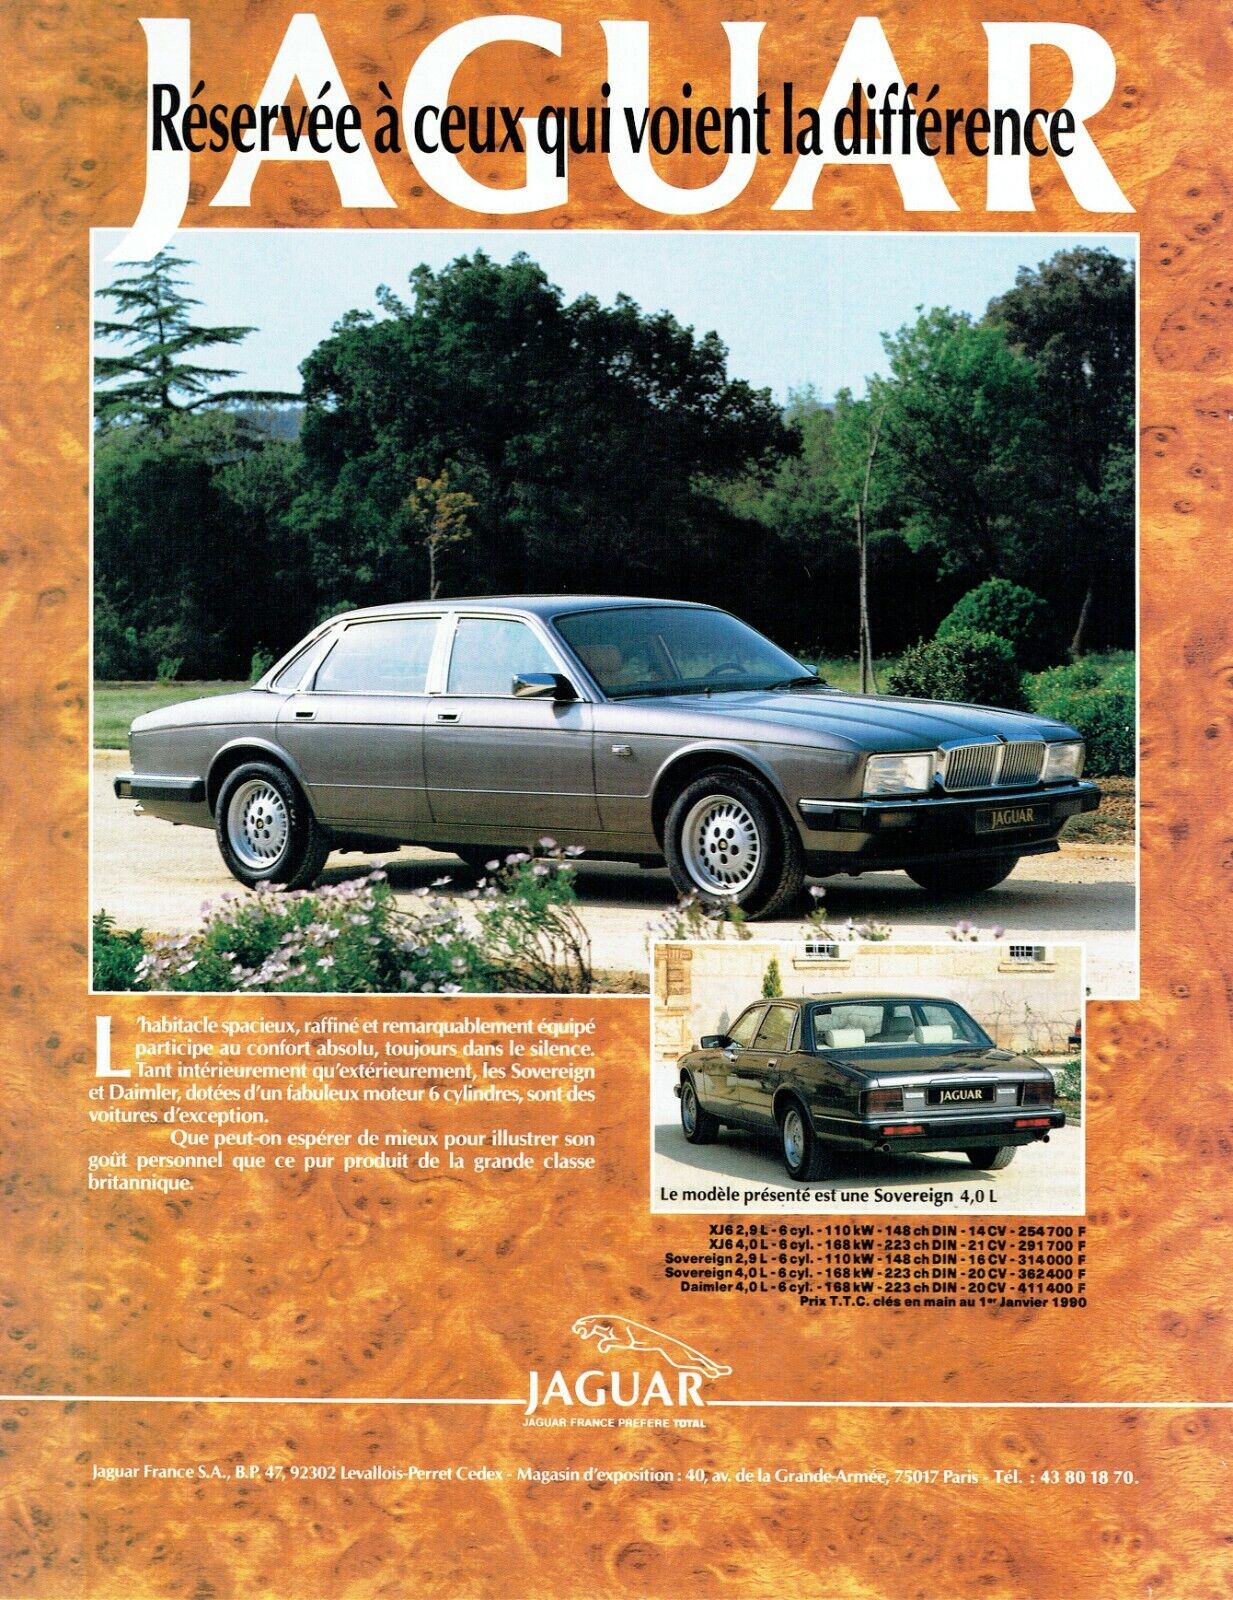  1990 Jaguar Sovereign 4.0l Spacious Living Advertising 0522